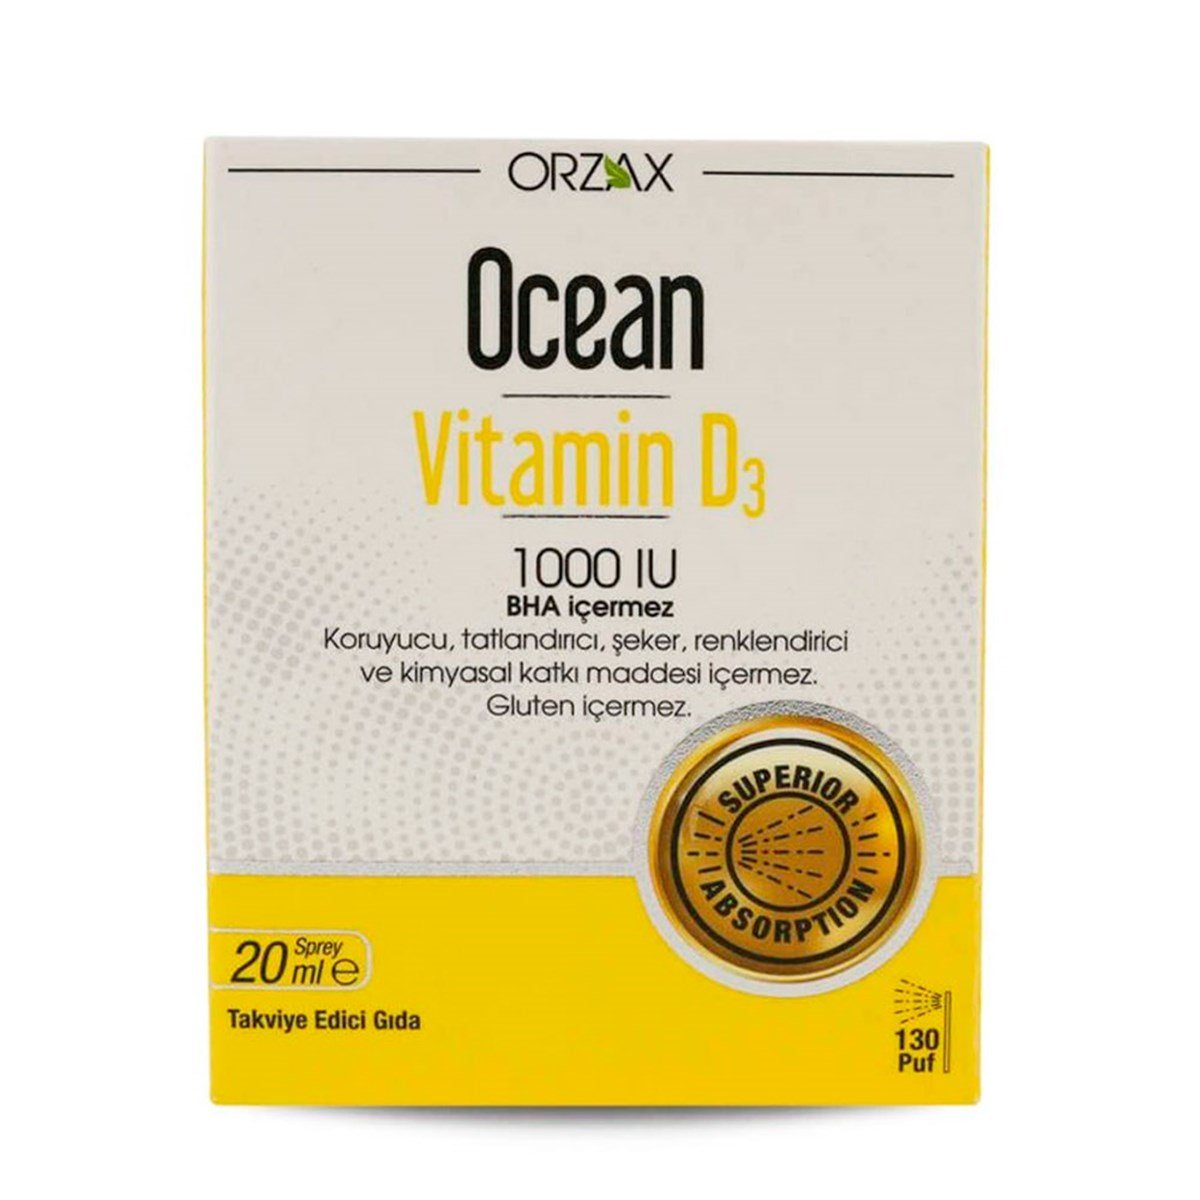 Ocean Vitamin D3 1000 IU 20 ml Sprey | Vitamin Dolabı